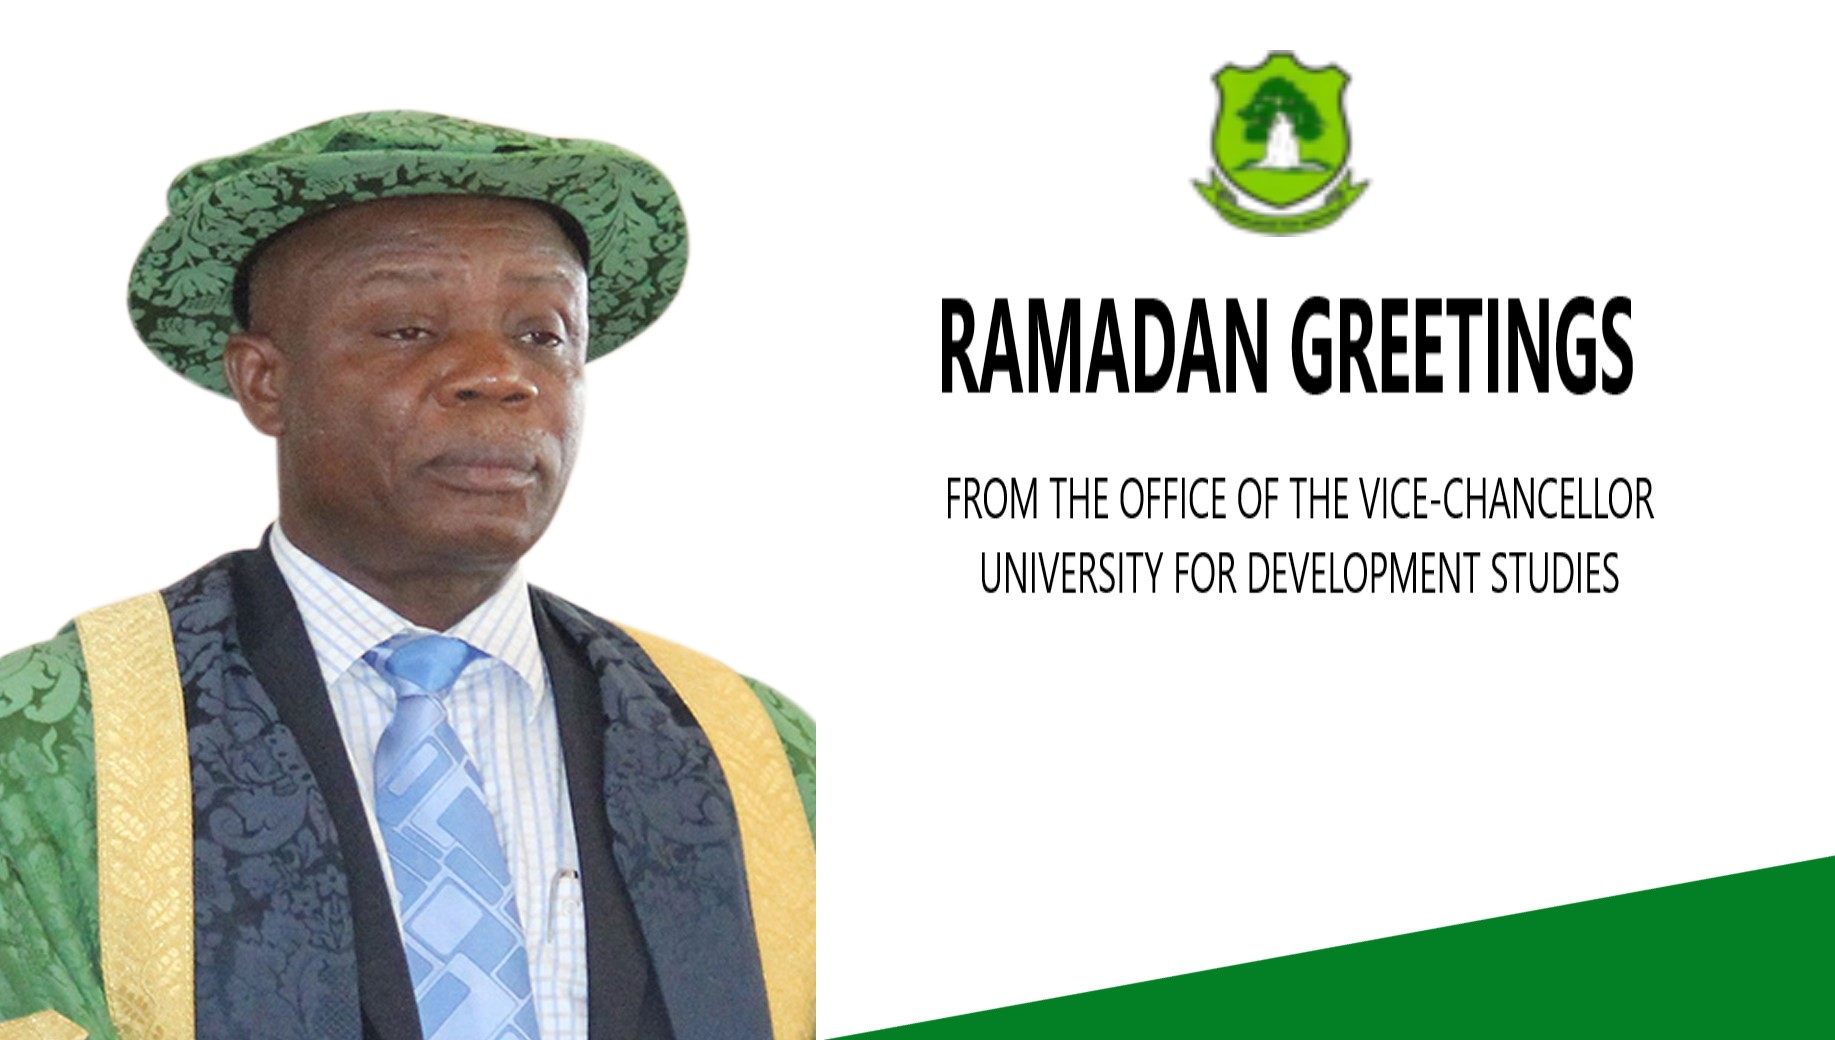 Ramadan Greetings From The Vice-Chancellor of The University for Development Studies, Prof. Gabriel Ayum Teye